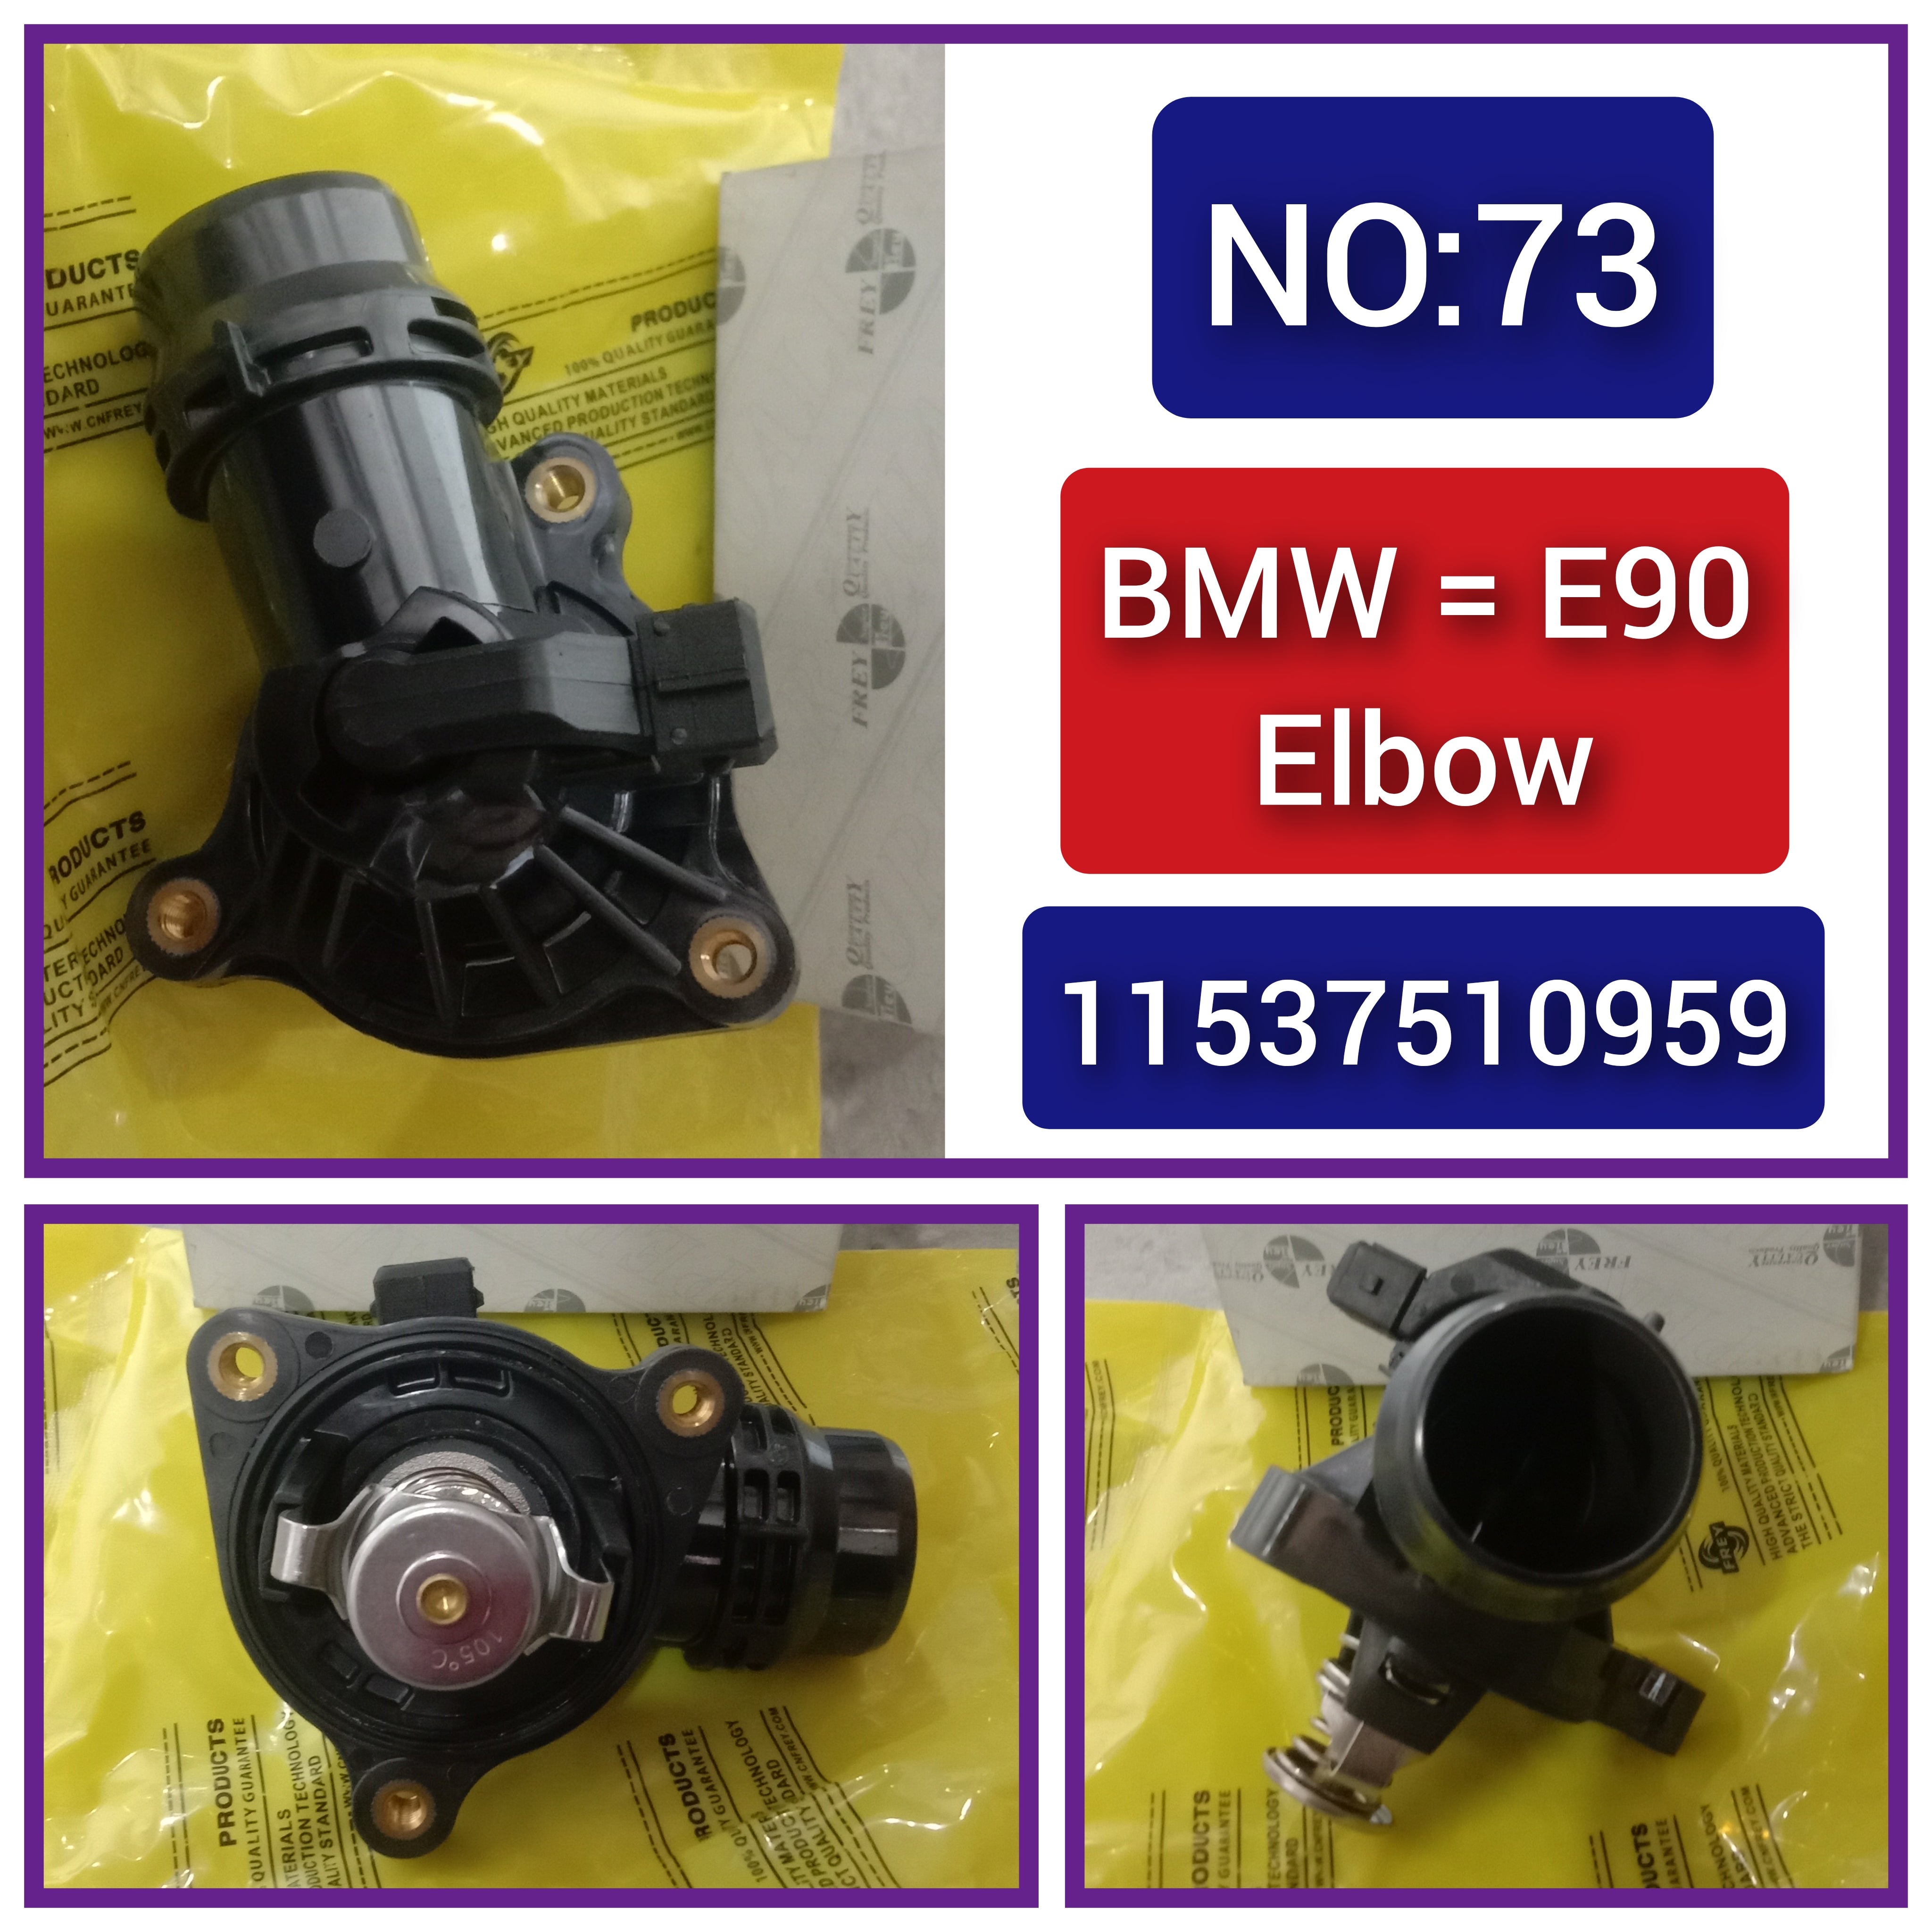 Elbow (Thermostat) 11537510959 For BMW 3 Series E90 & X1 E84 Tag-E-73